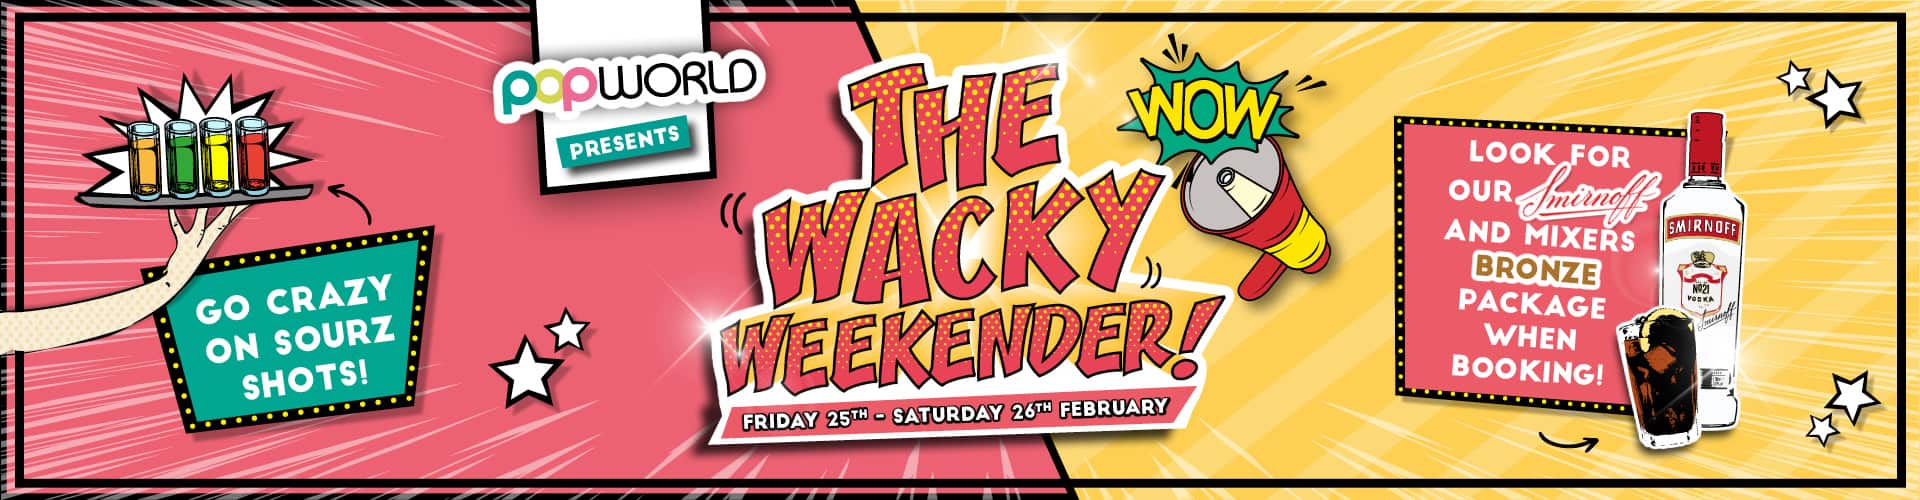 February Wacky Weekender at Popworld